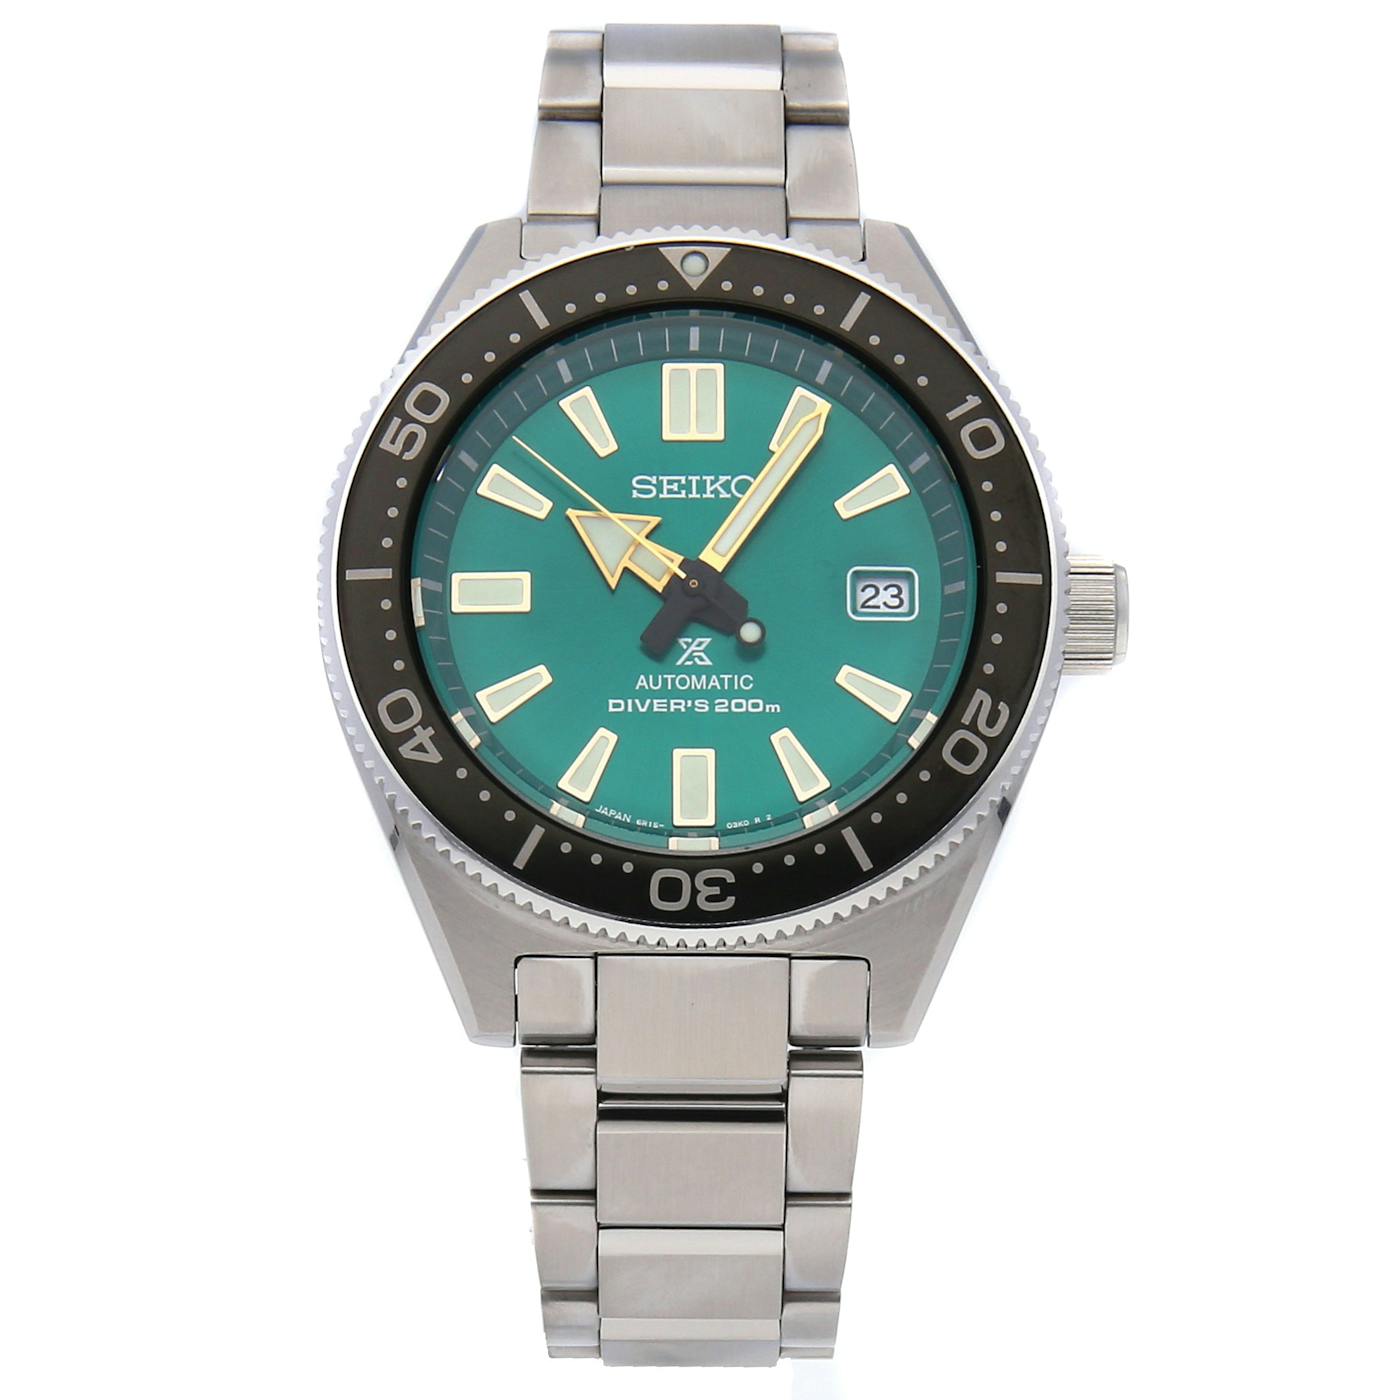 Seiko Prospex Diver 200m Limited Edition SBDC059 | WatchBox